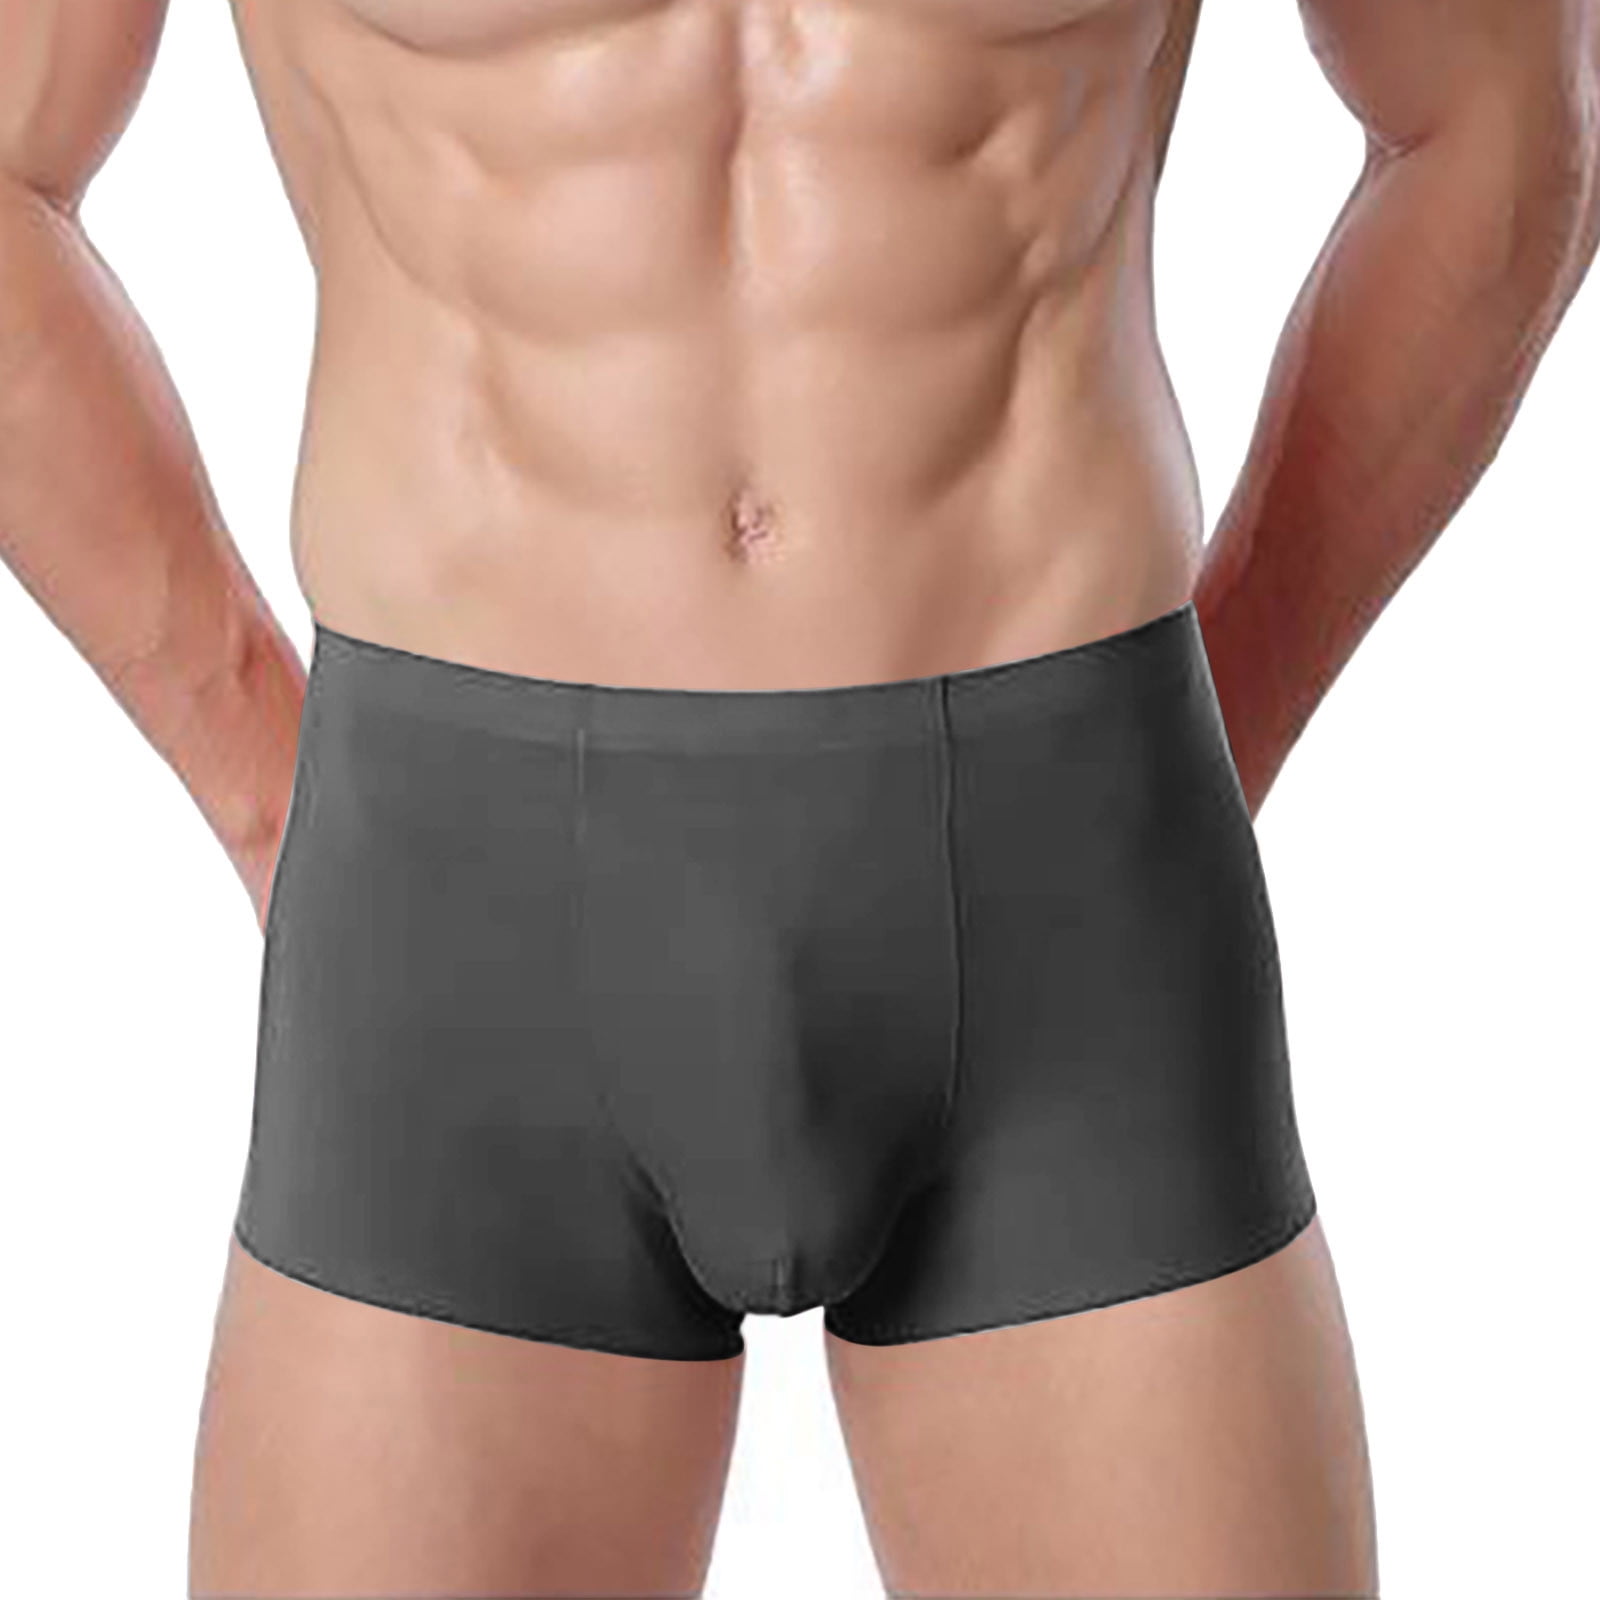 TIHLMKi Men's Underwear Deals Clearance Under $10 Men Softty Camouflag  Print Underpants Knickers Boxers Low Waist Underwears